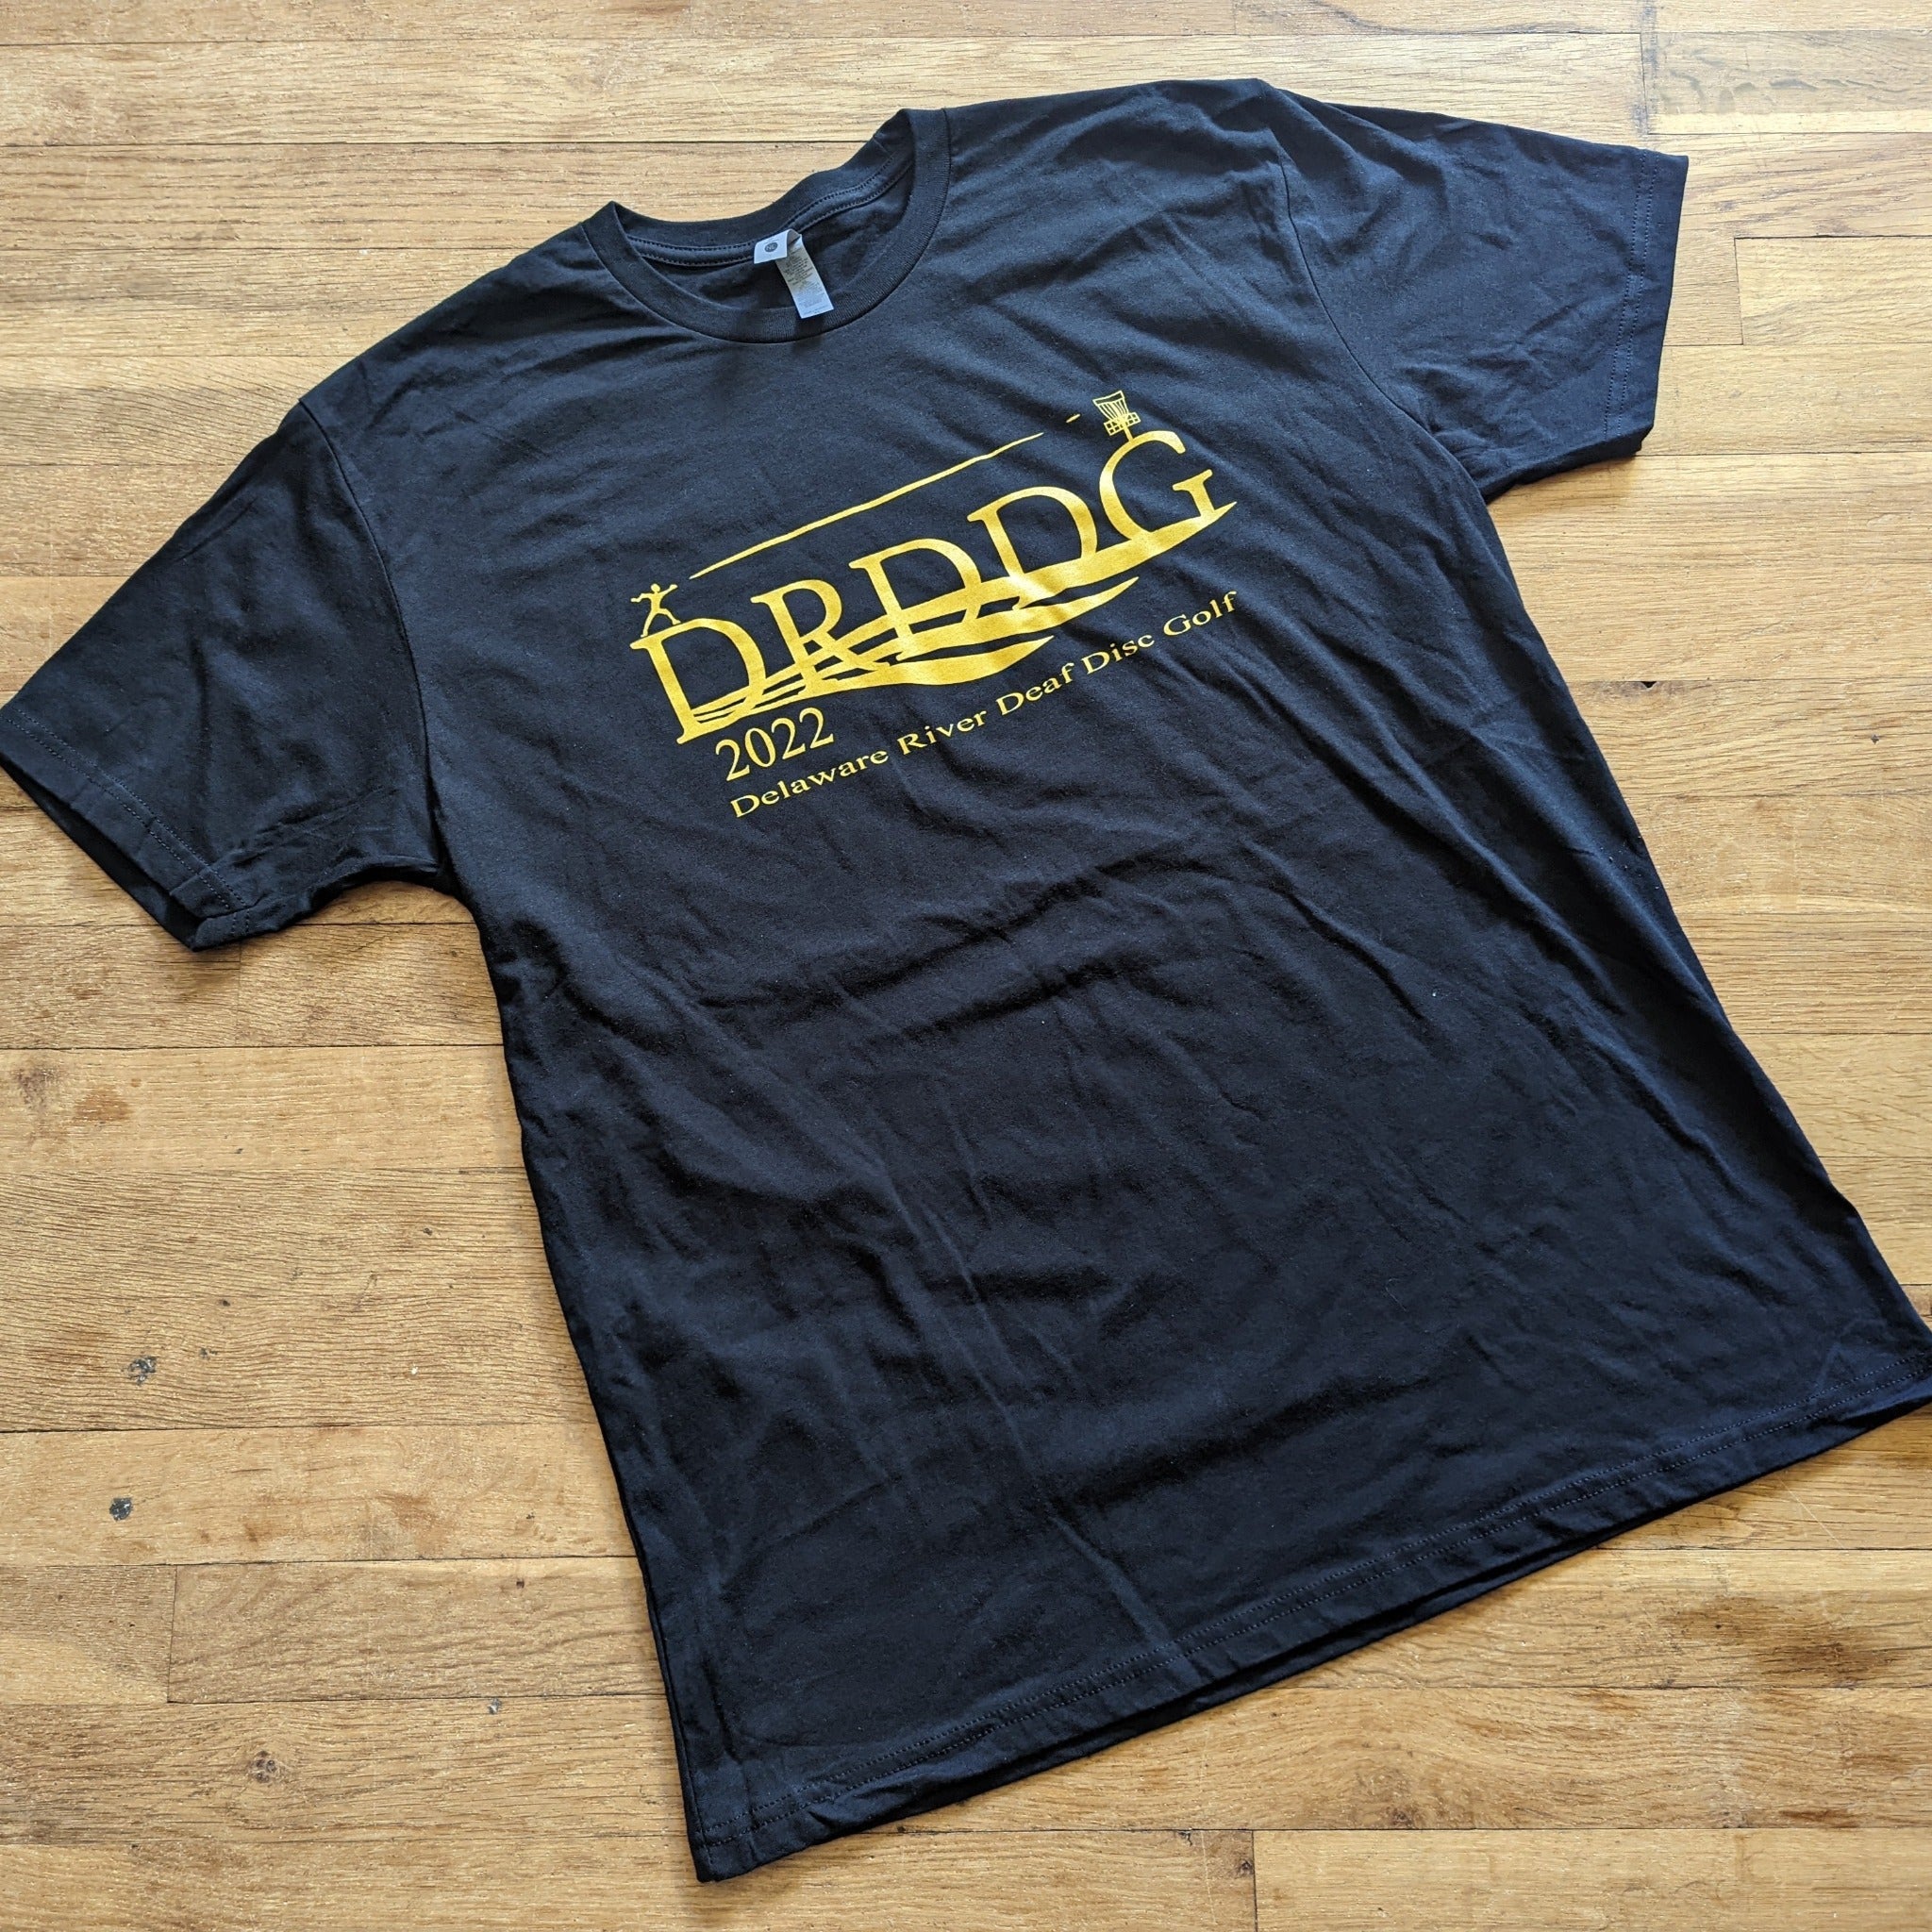 NEXT LEVEL APPAREL Unisex CVC T-Shirt with DRDDG Logo